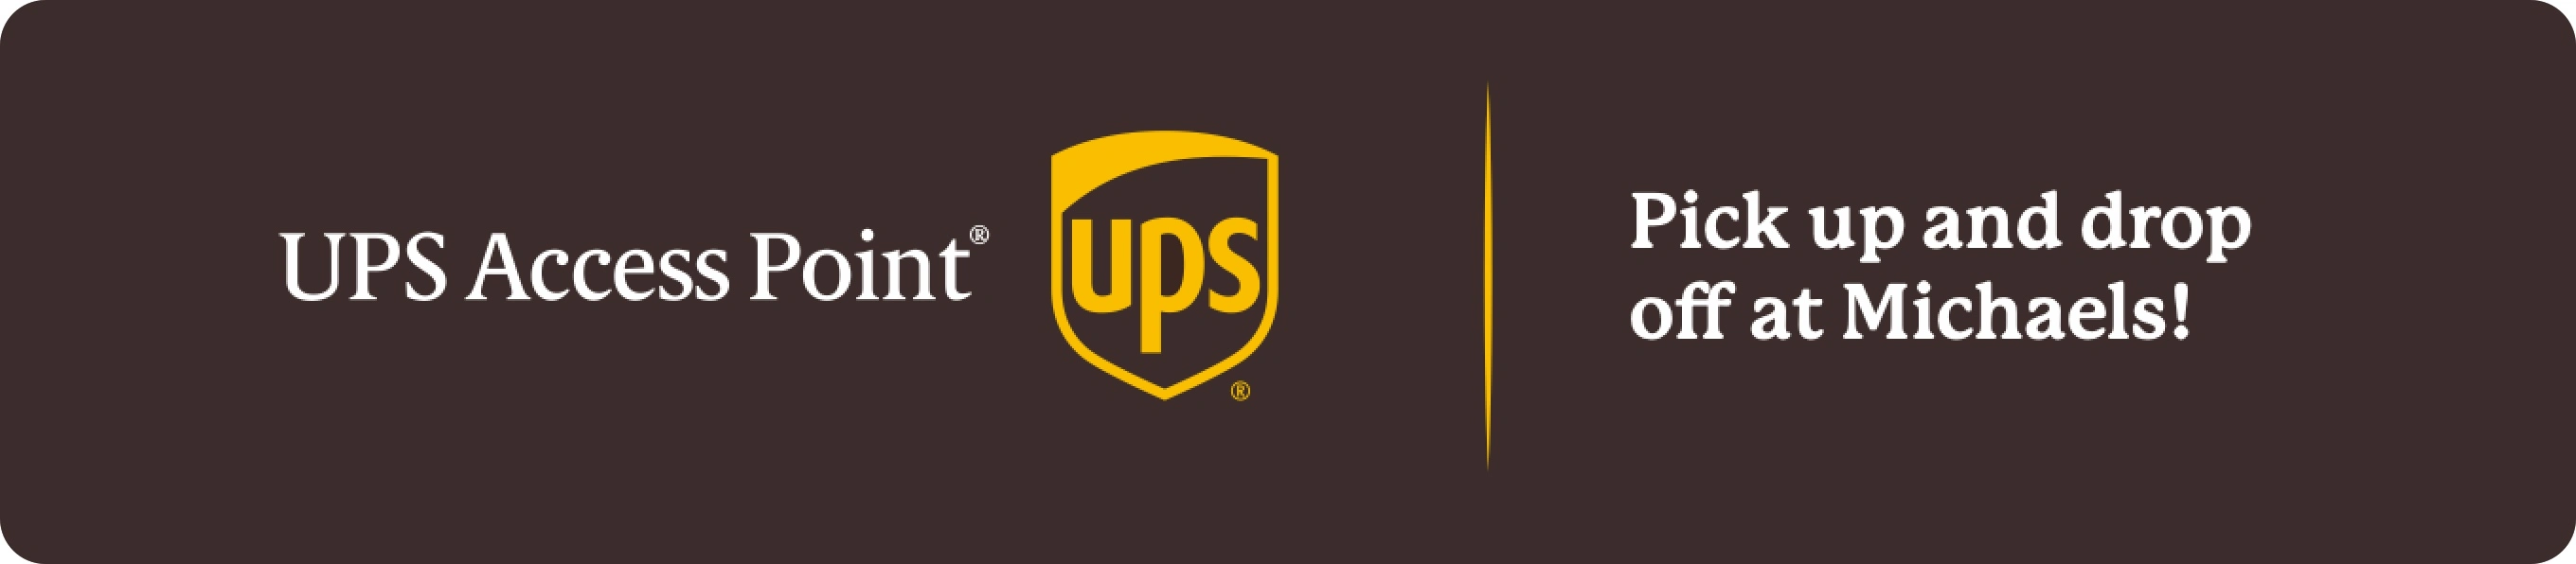 UPS banner